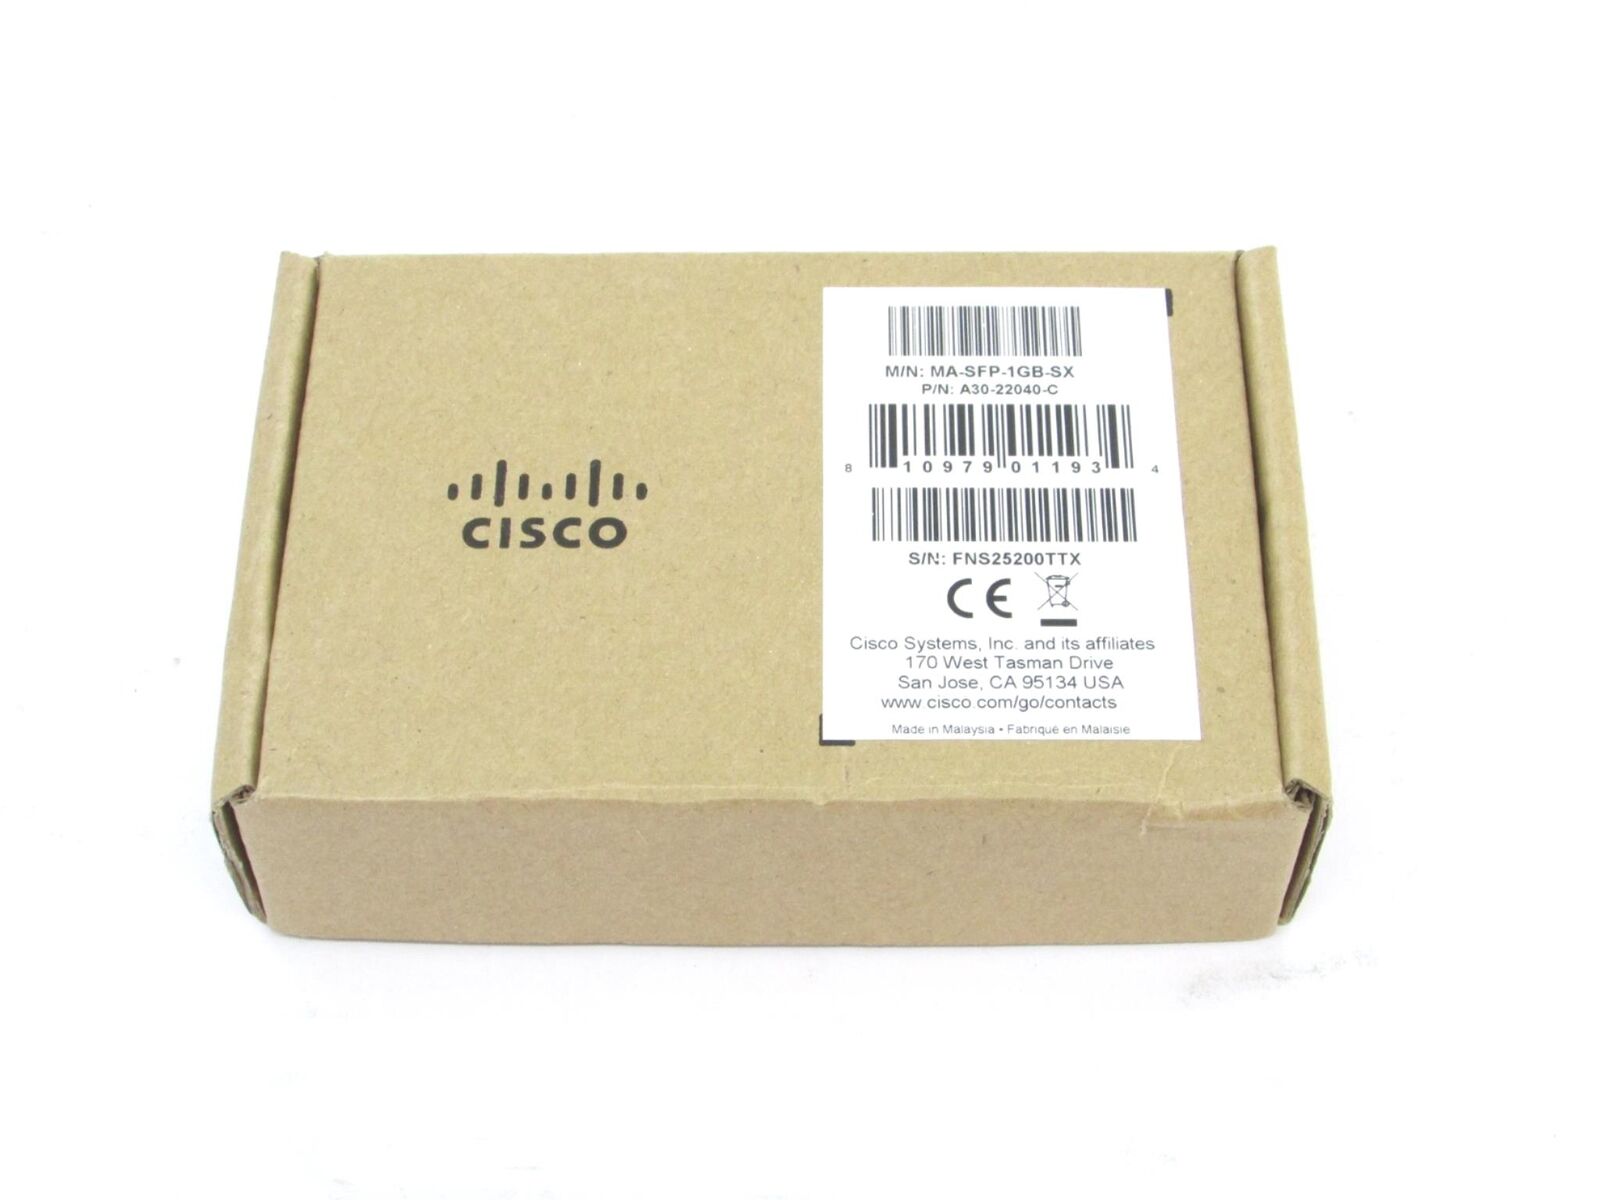 2x Cisco Meraki MA-SFP-1GB-SX Transceiver Module Lot of 2 New